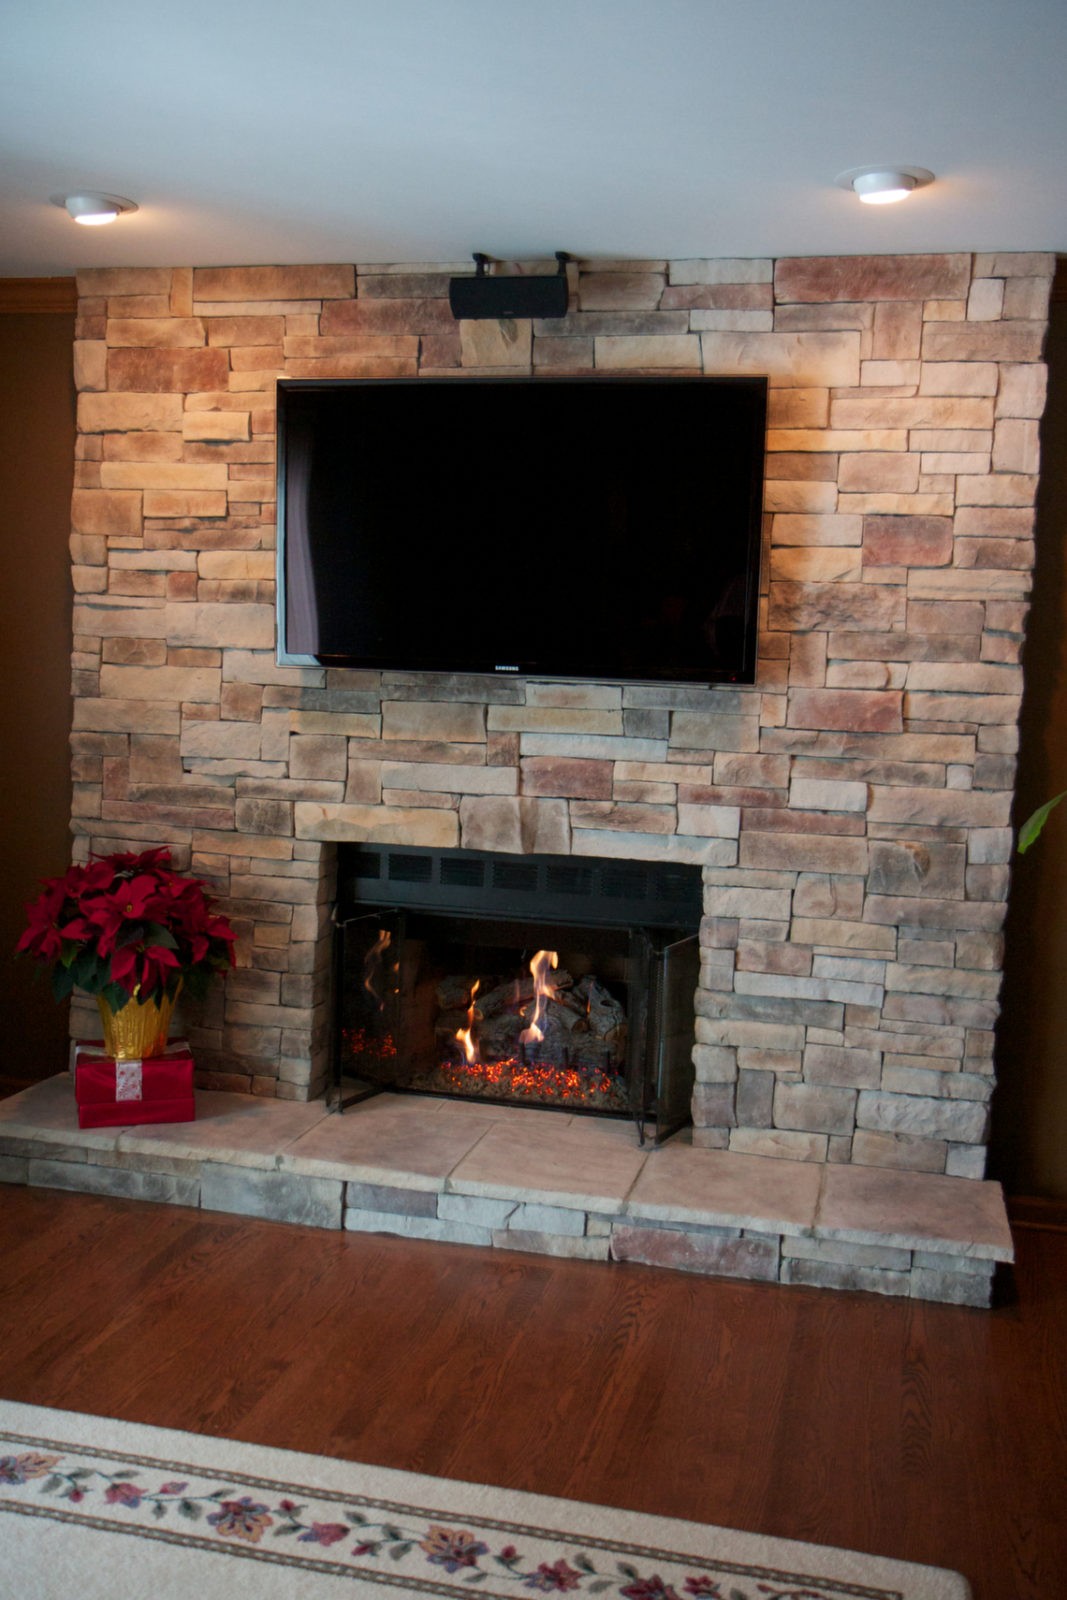 Mountain stack stone veneer fireplace with poinsettias